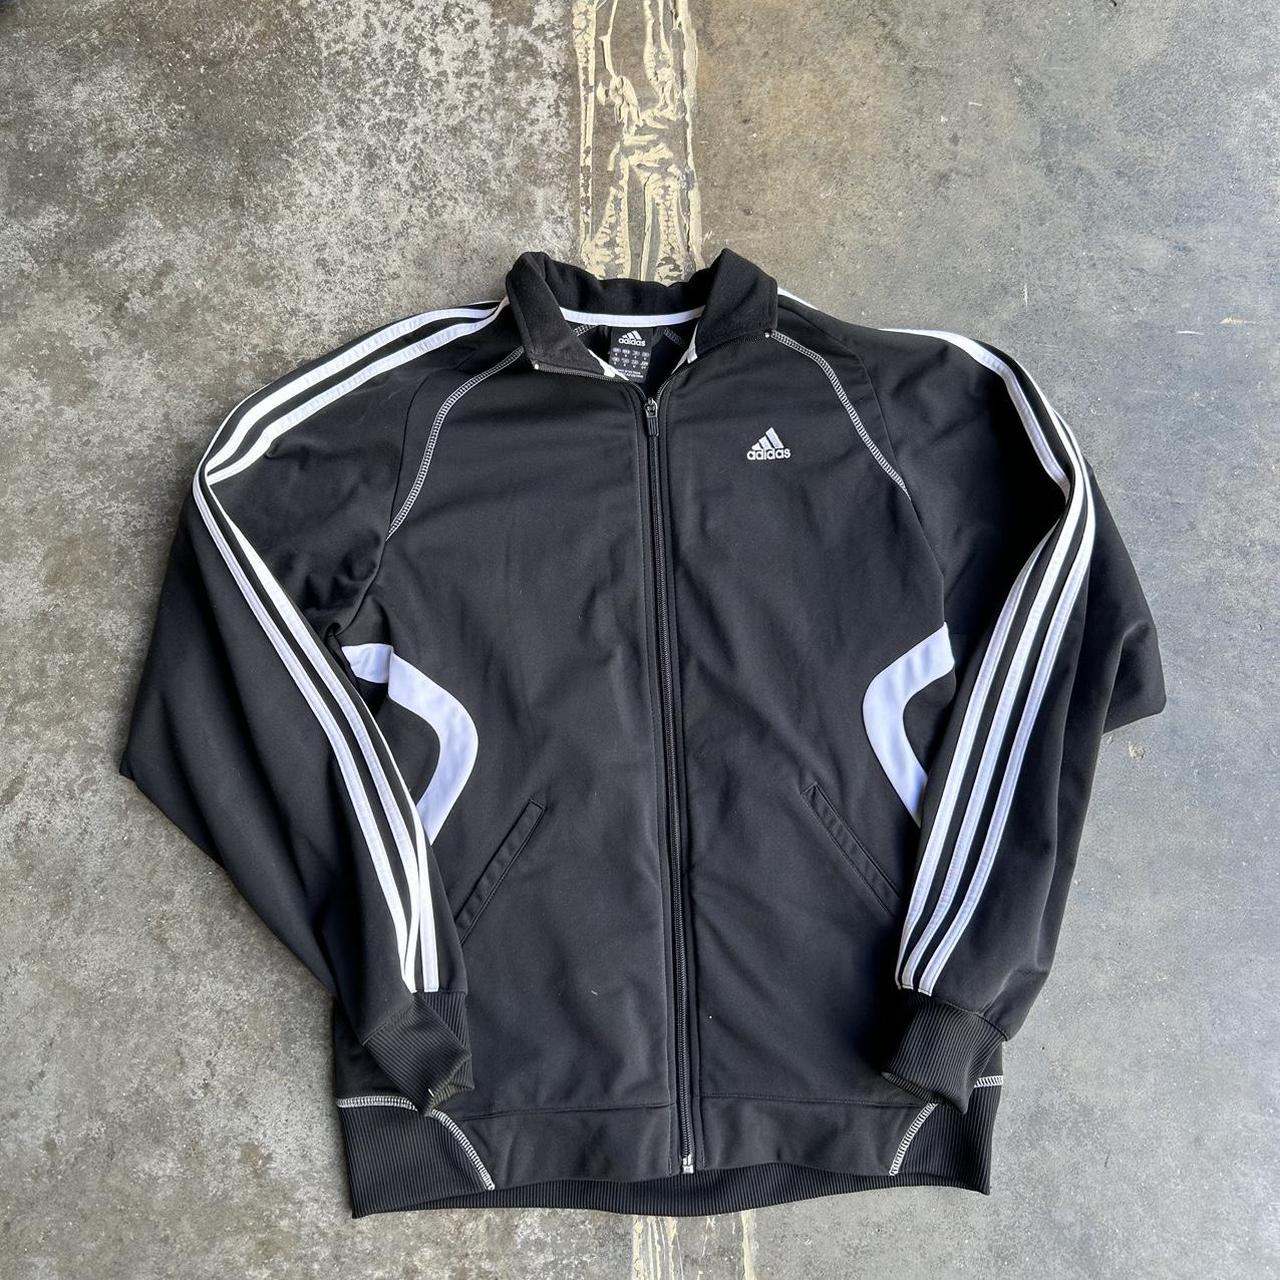 2009 Adidas zip up soccer jacket size small,... - Depop